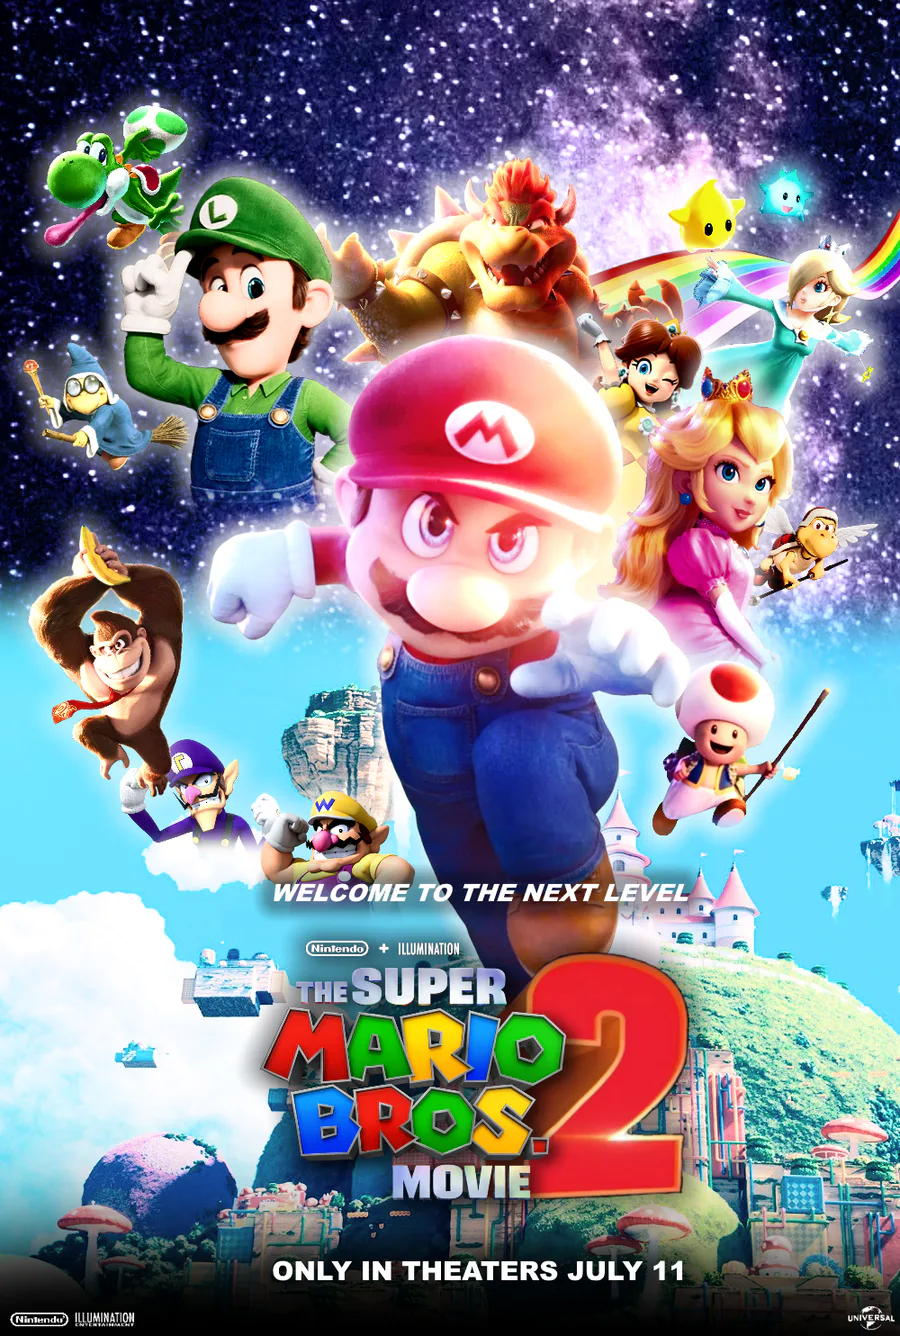 Super Mario Bros. 2 - O Filme (2025) Trailer Fanmade 